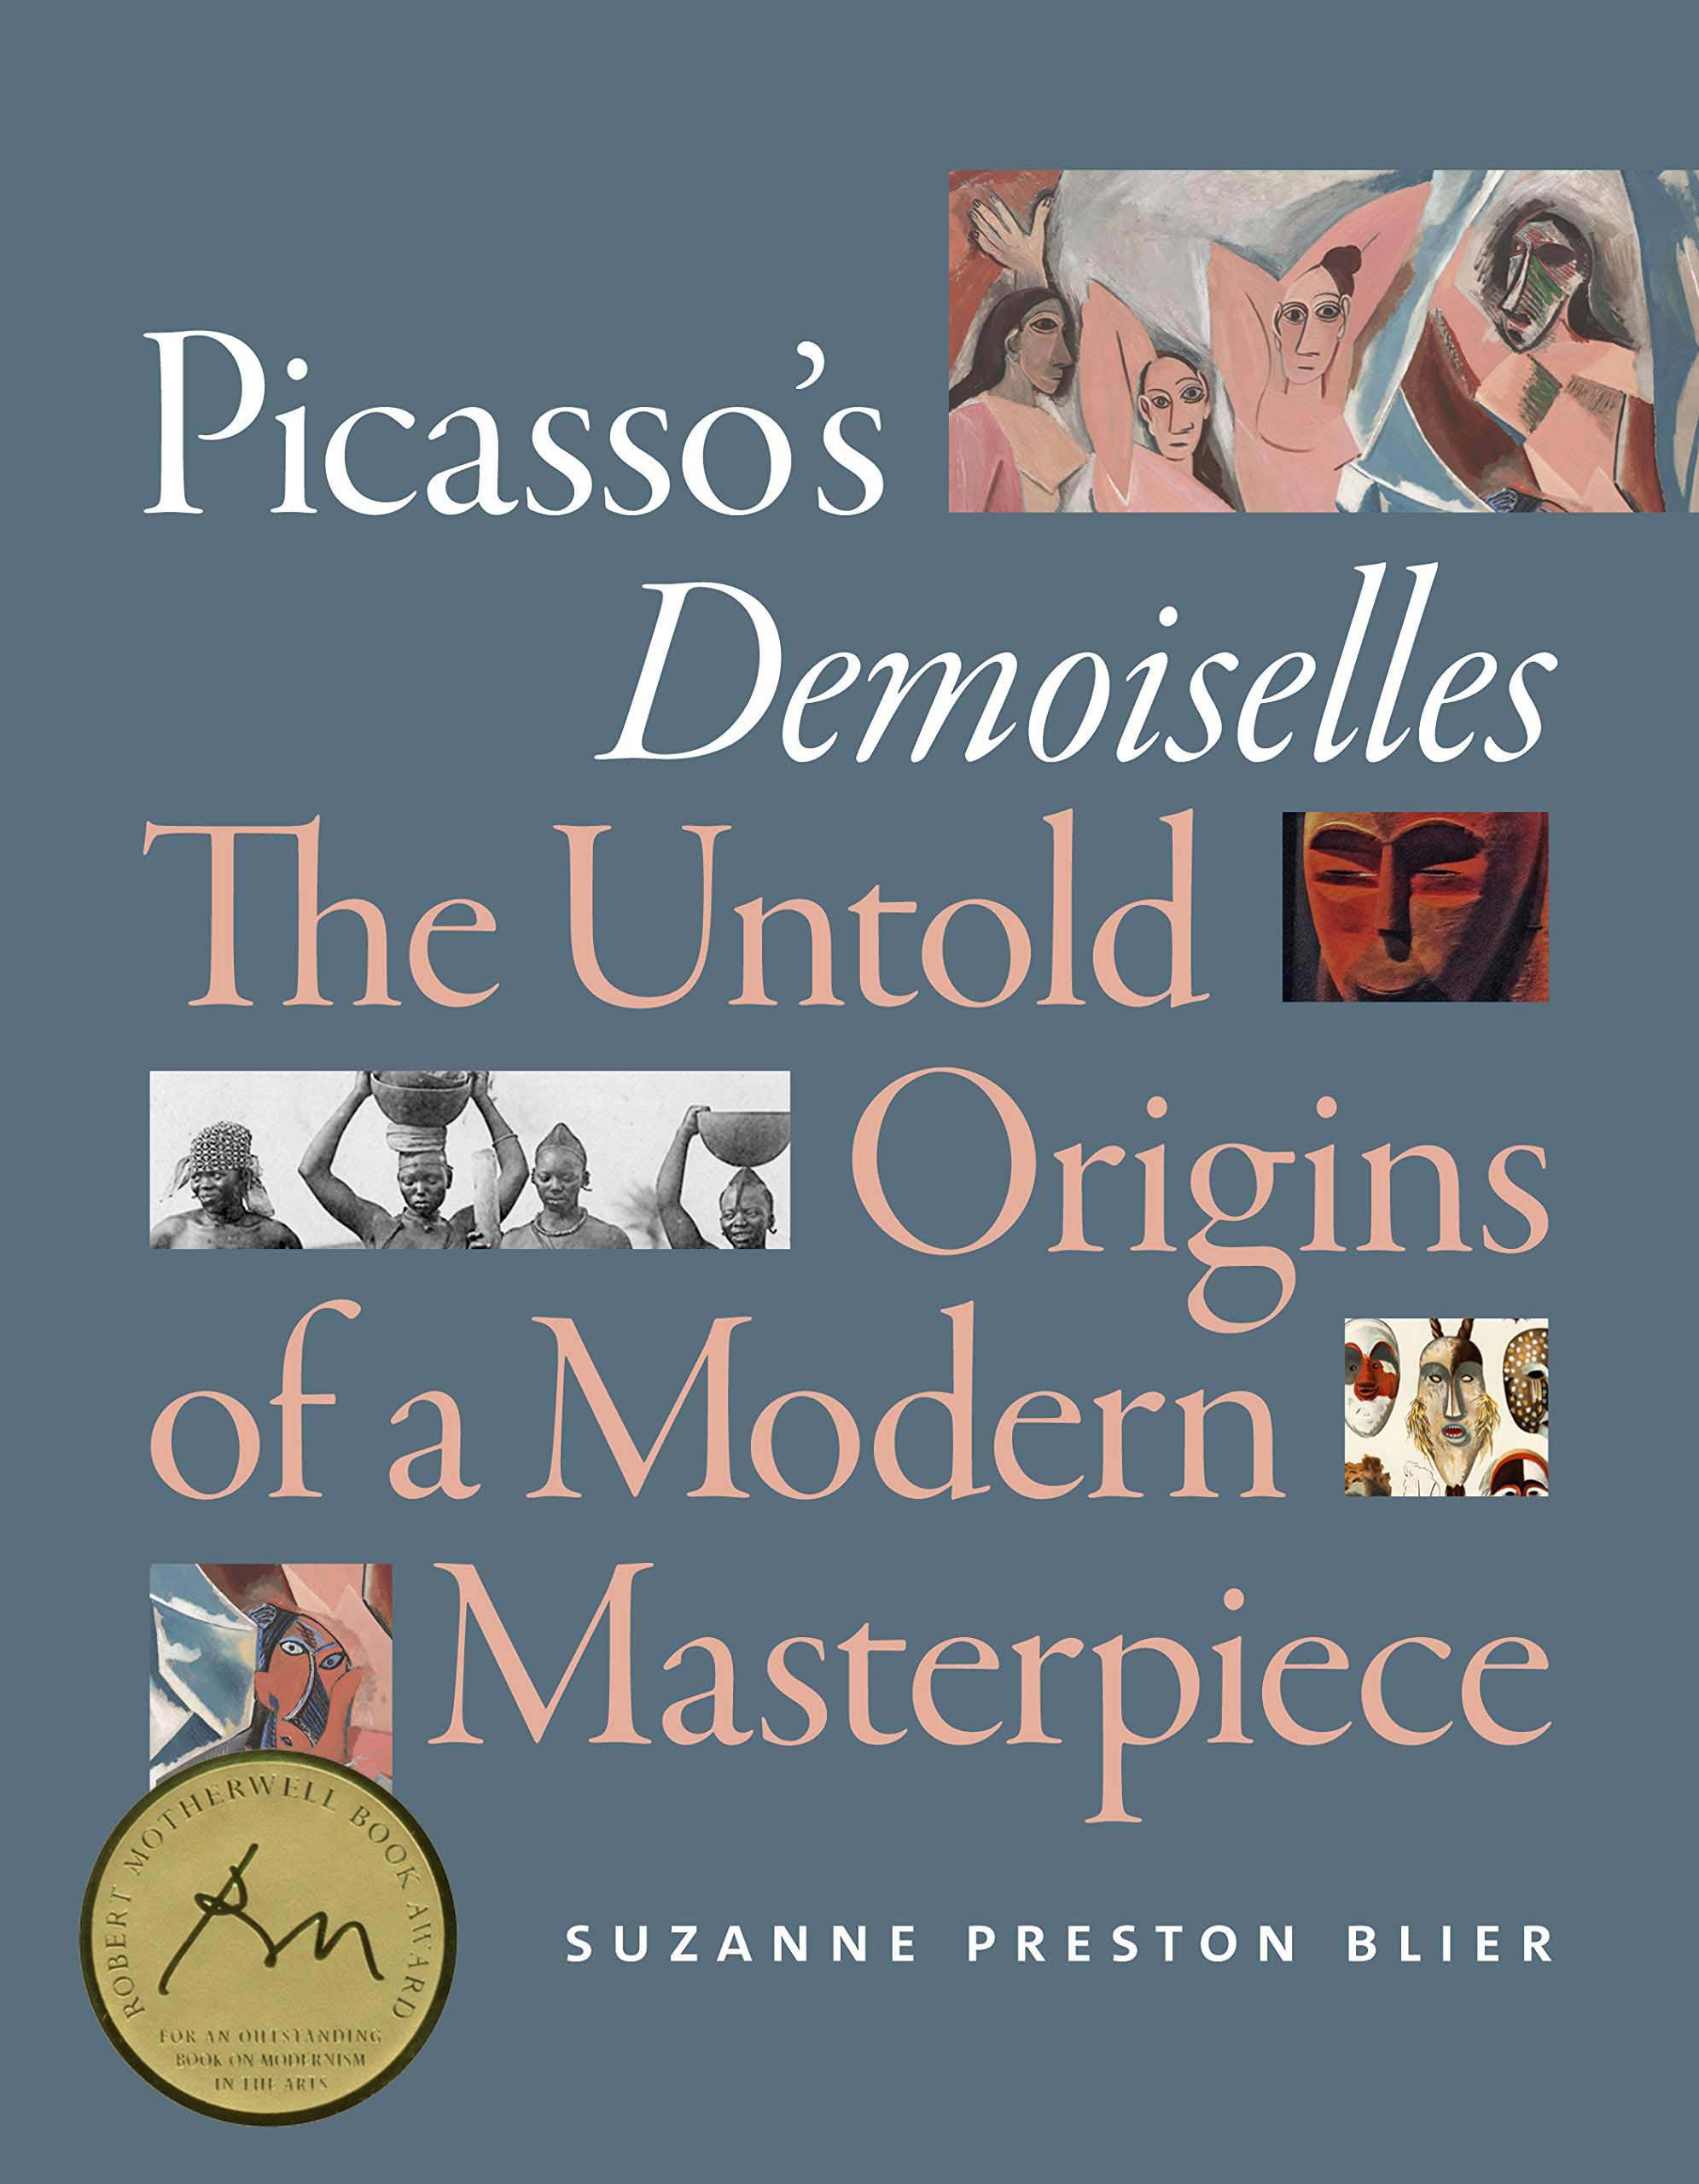 "Picasso's Demoiselles: The Untold Origins of a Modern Masterpiece"